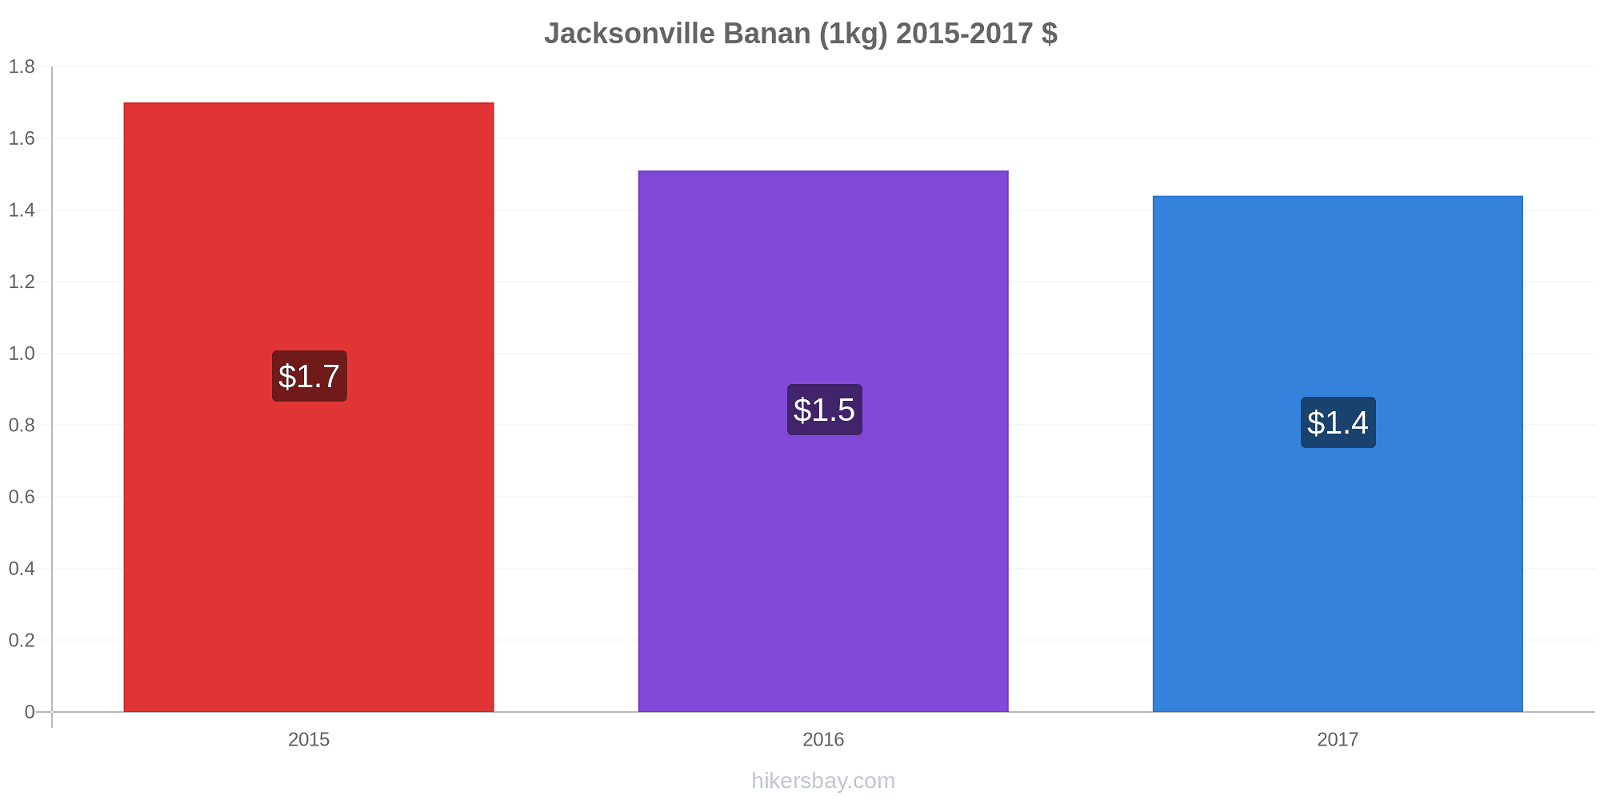 Jacksonville prisendringer Banan (1kg) hikersbay.com